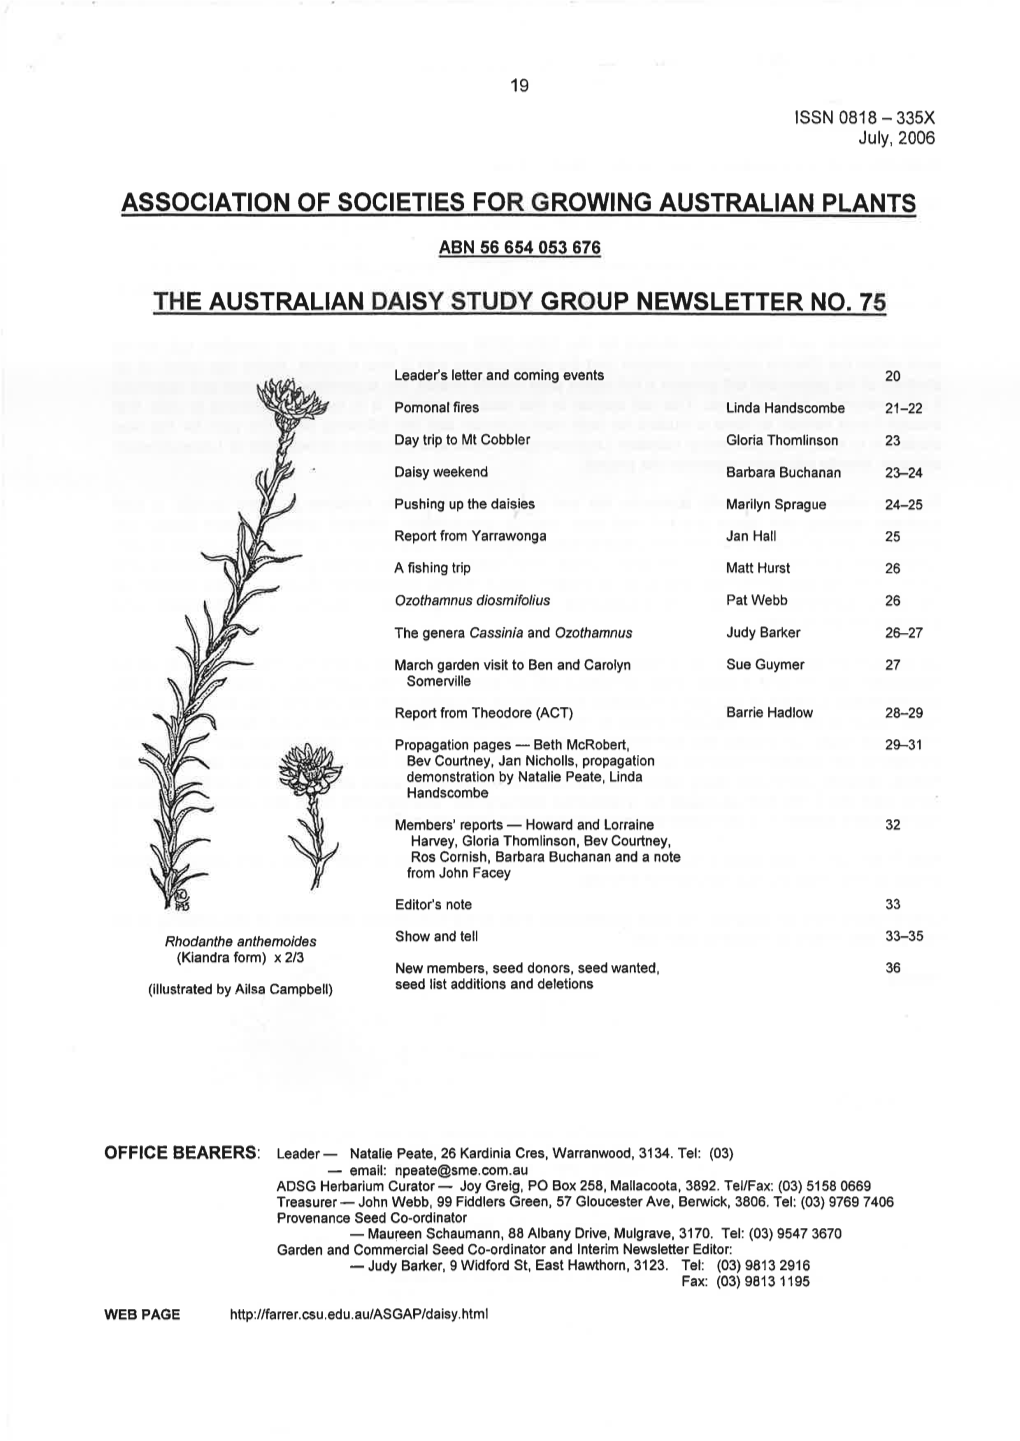 Association of Societies for Growing Australian Plants the Australian Daisy Study Group Newsletter No. 75